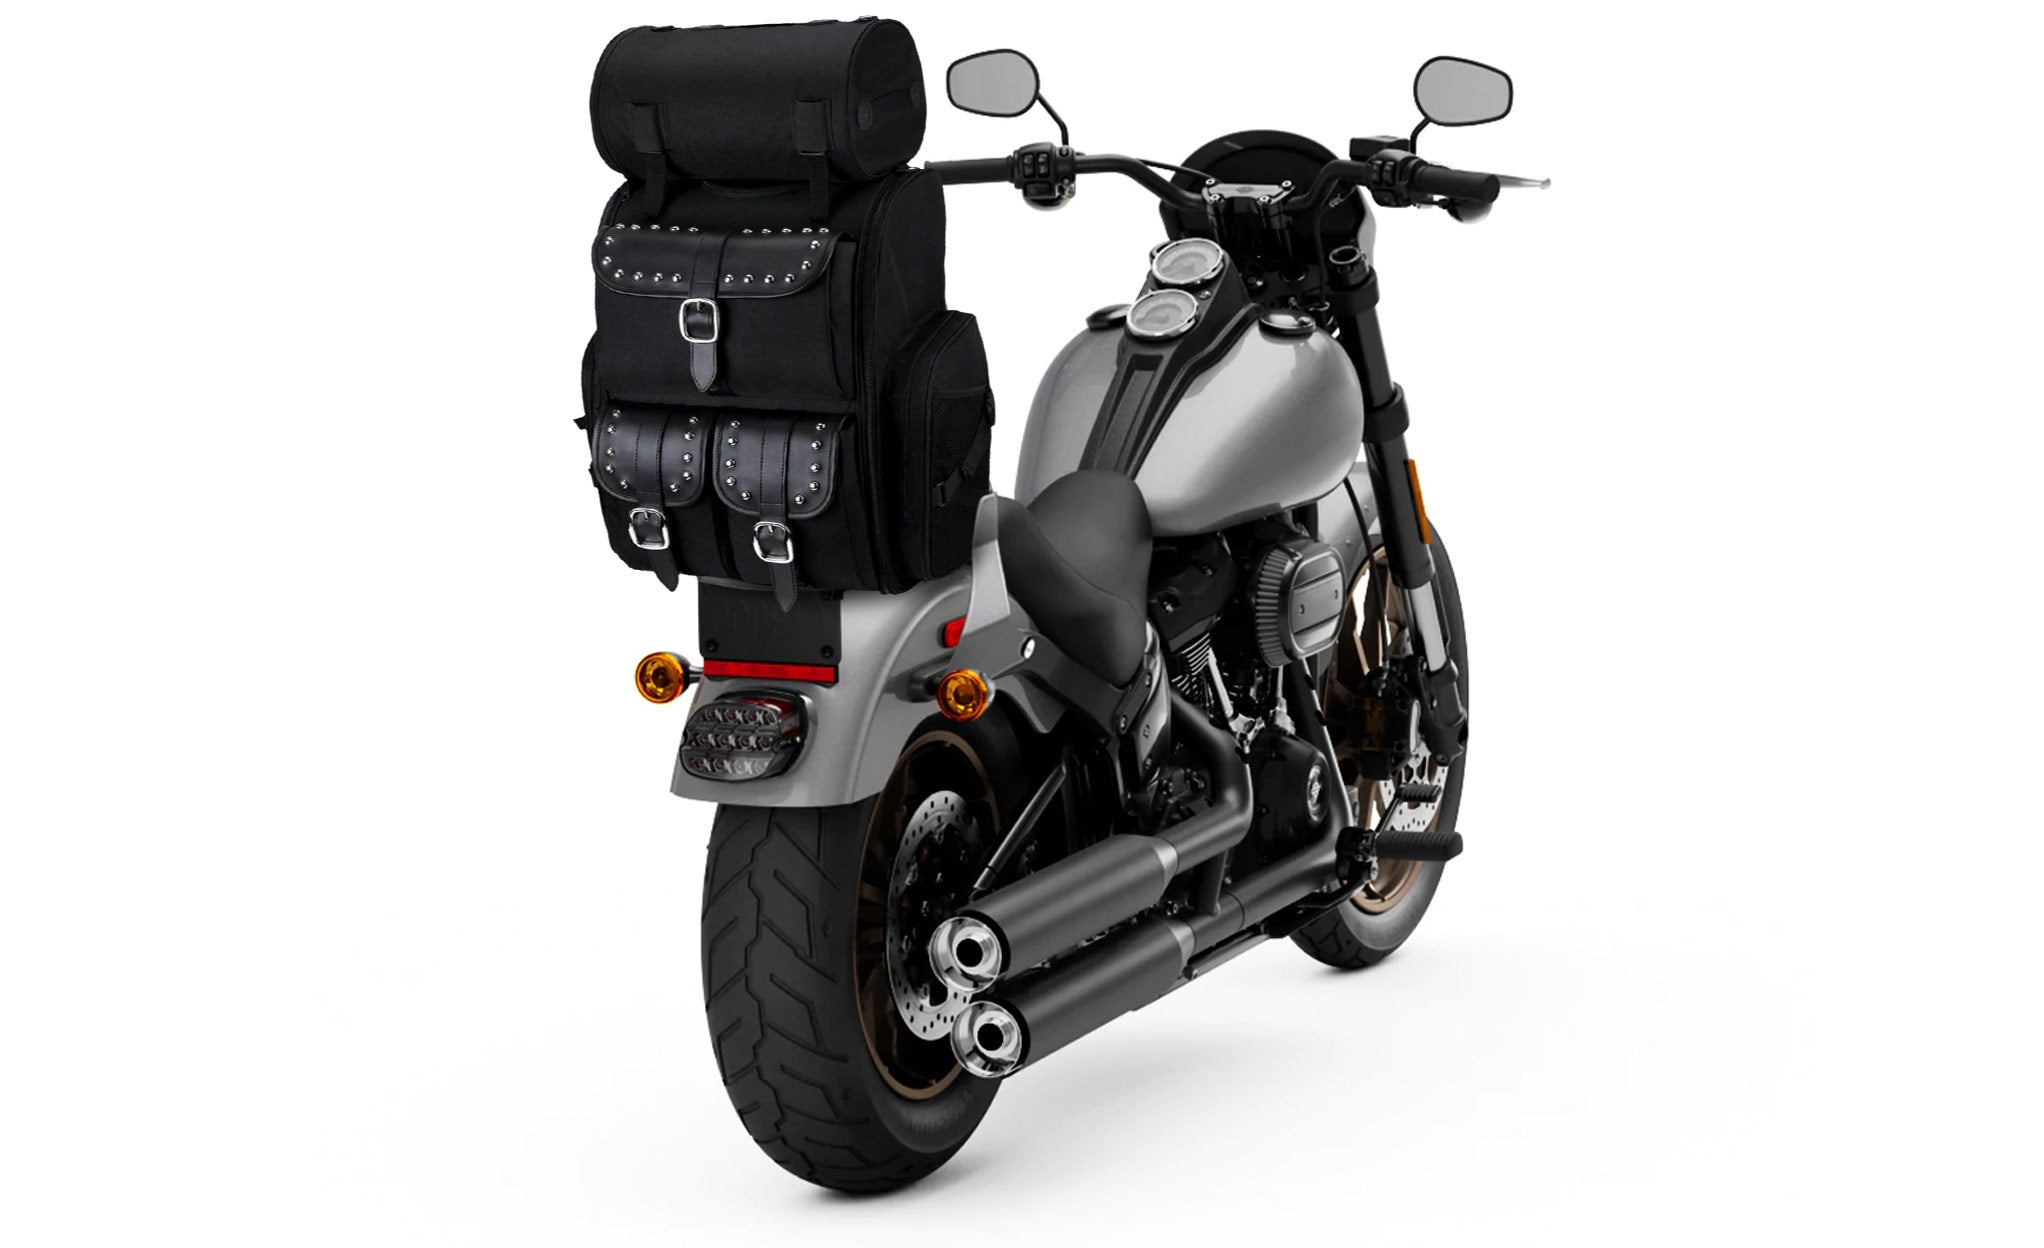 Viking Highway Extra Large Studded Suzuki Motorcycle Sissy Bar Bag Bag on Bike View @expand